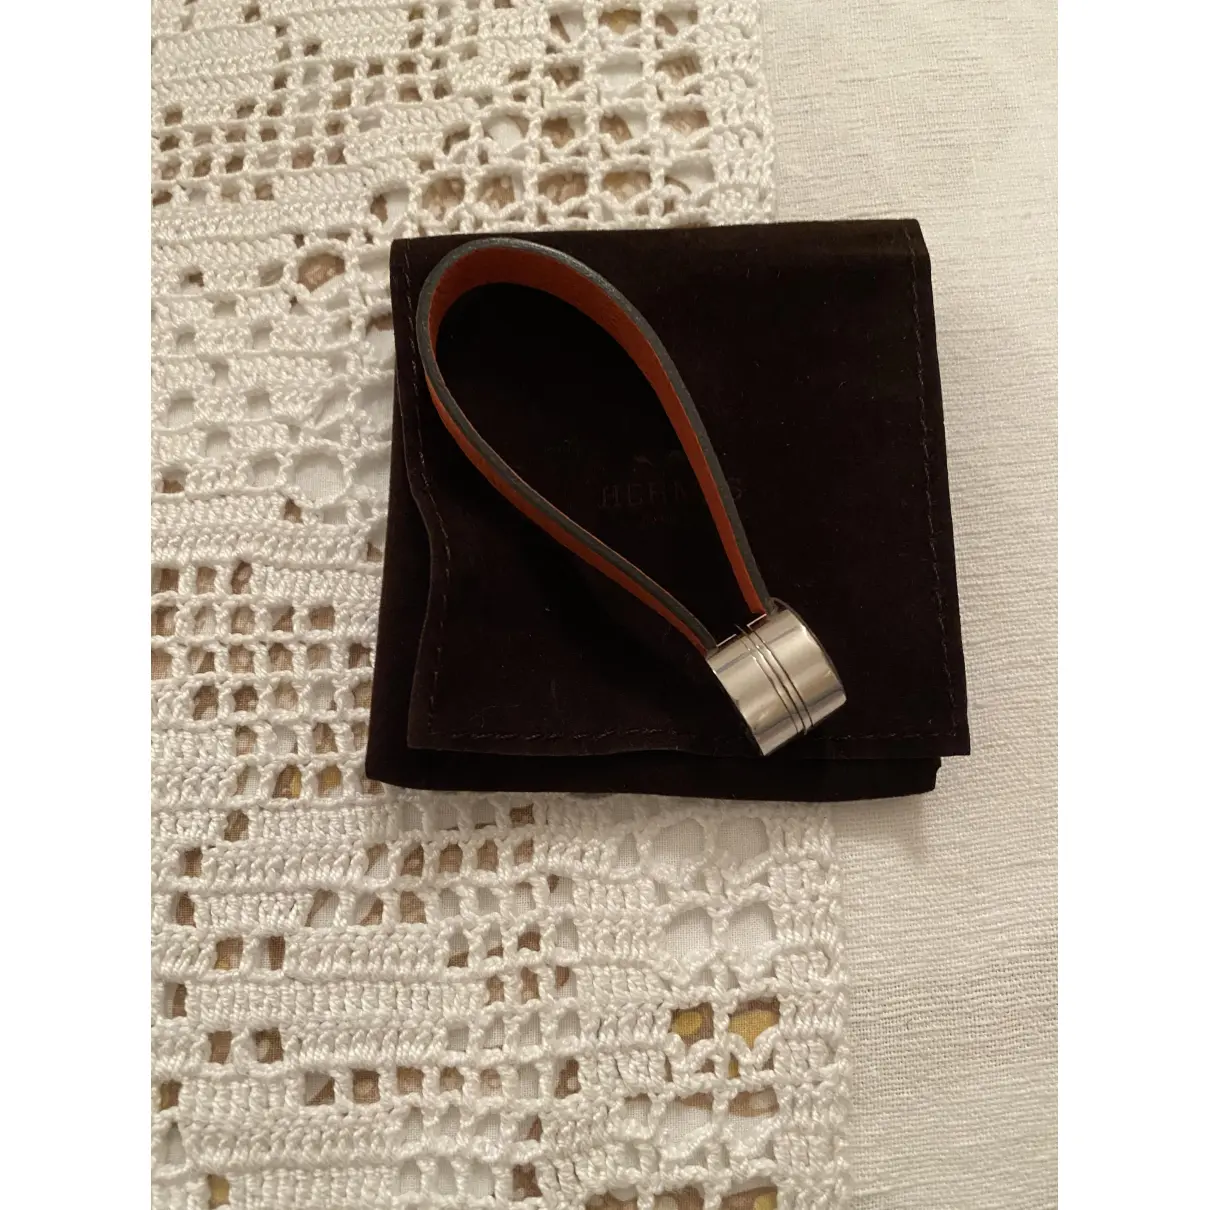 Buy Hermès Leather purse online